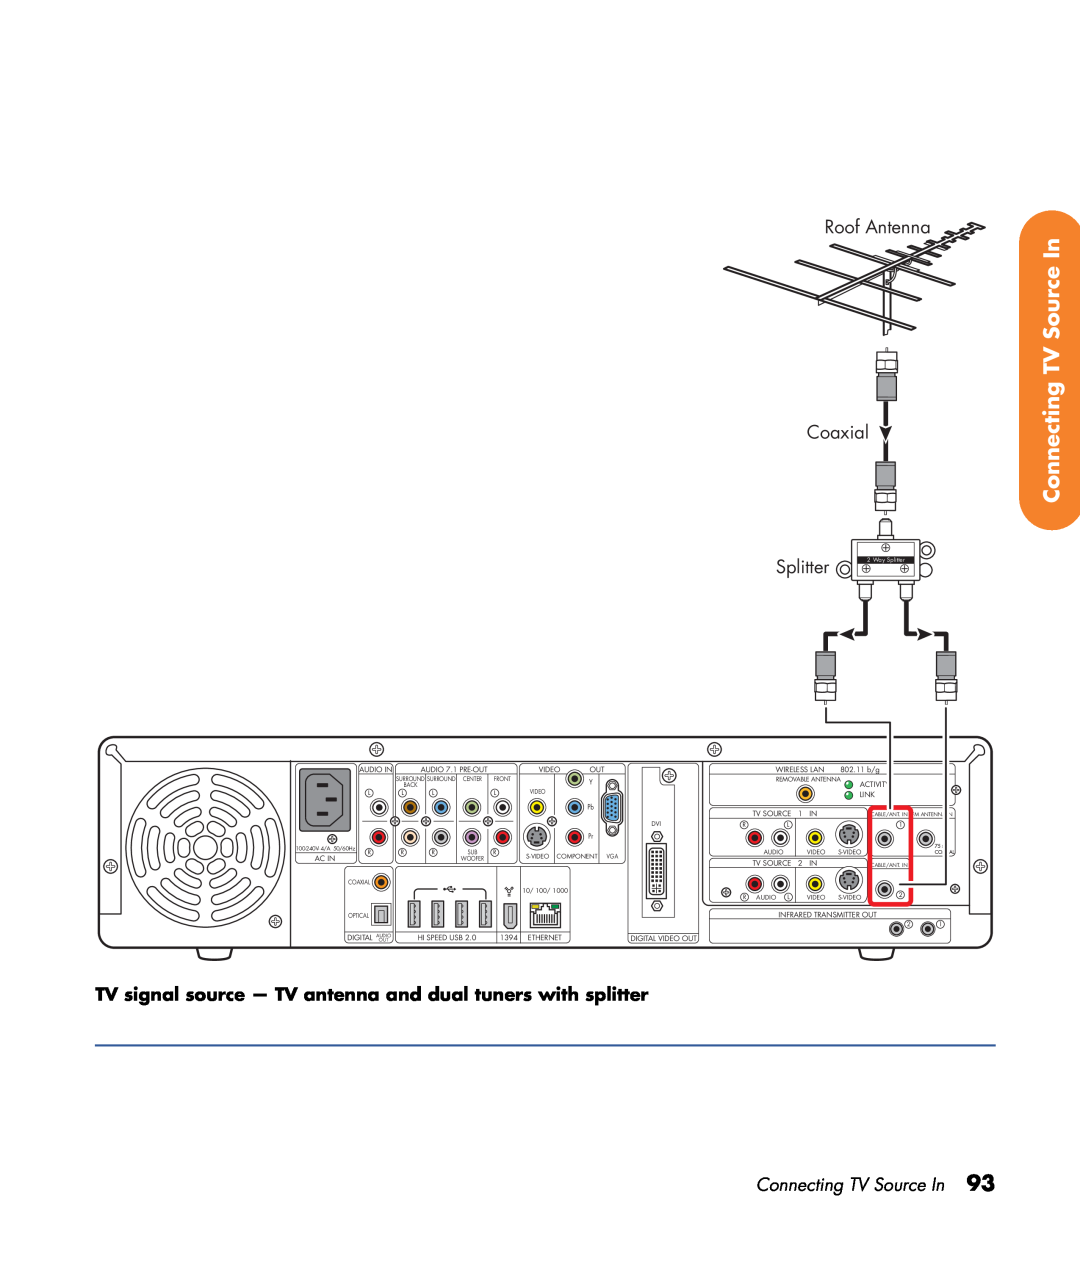 HP z540, z557, z555, z552, z545 manual Connecting TV Source In, Roof Antenna Coaxial, Splitter 